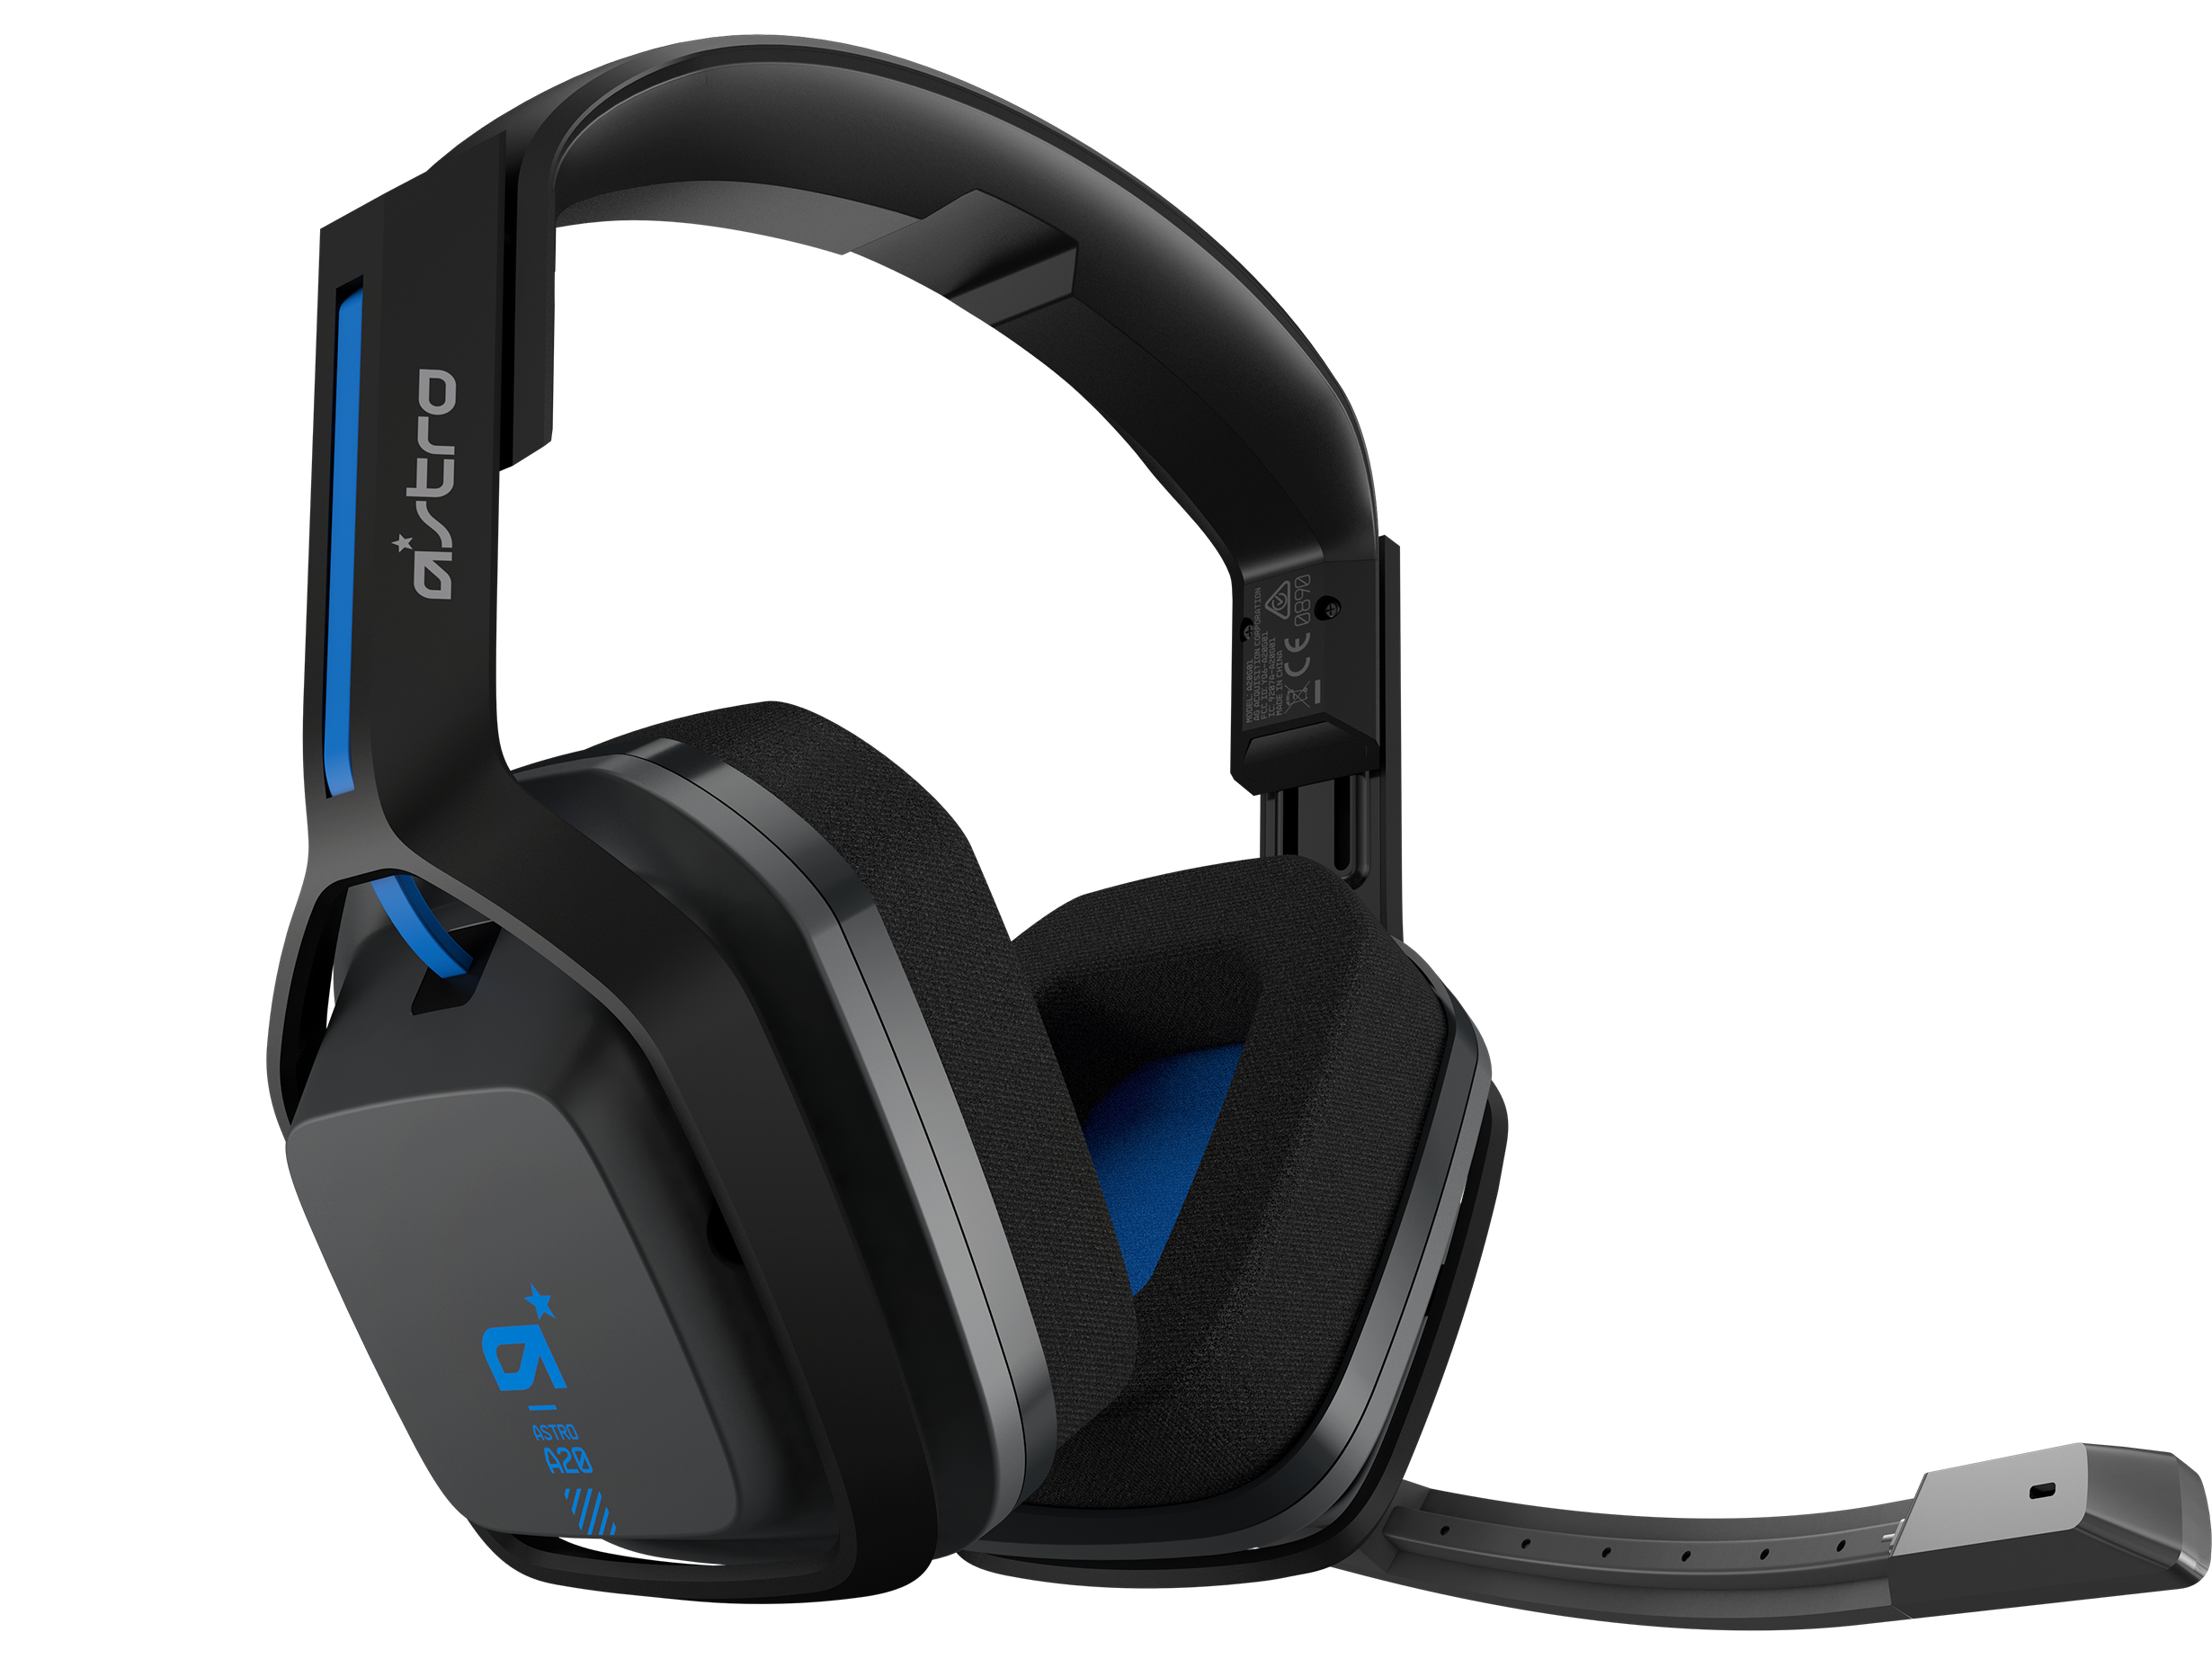 bluetooth compatible headphones ps4